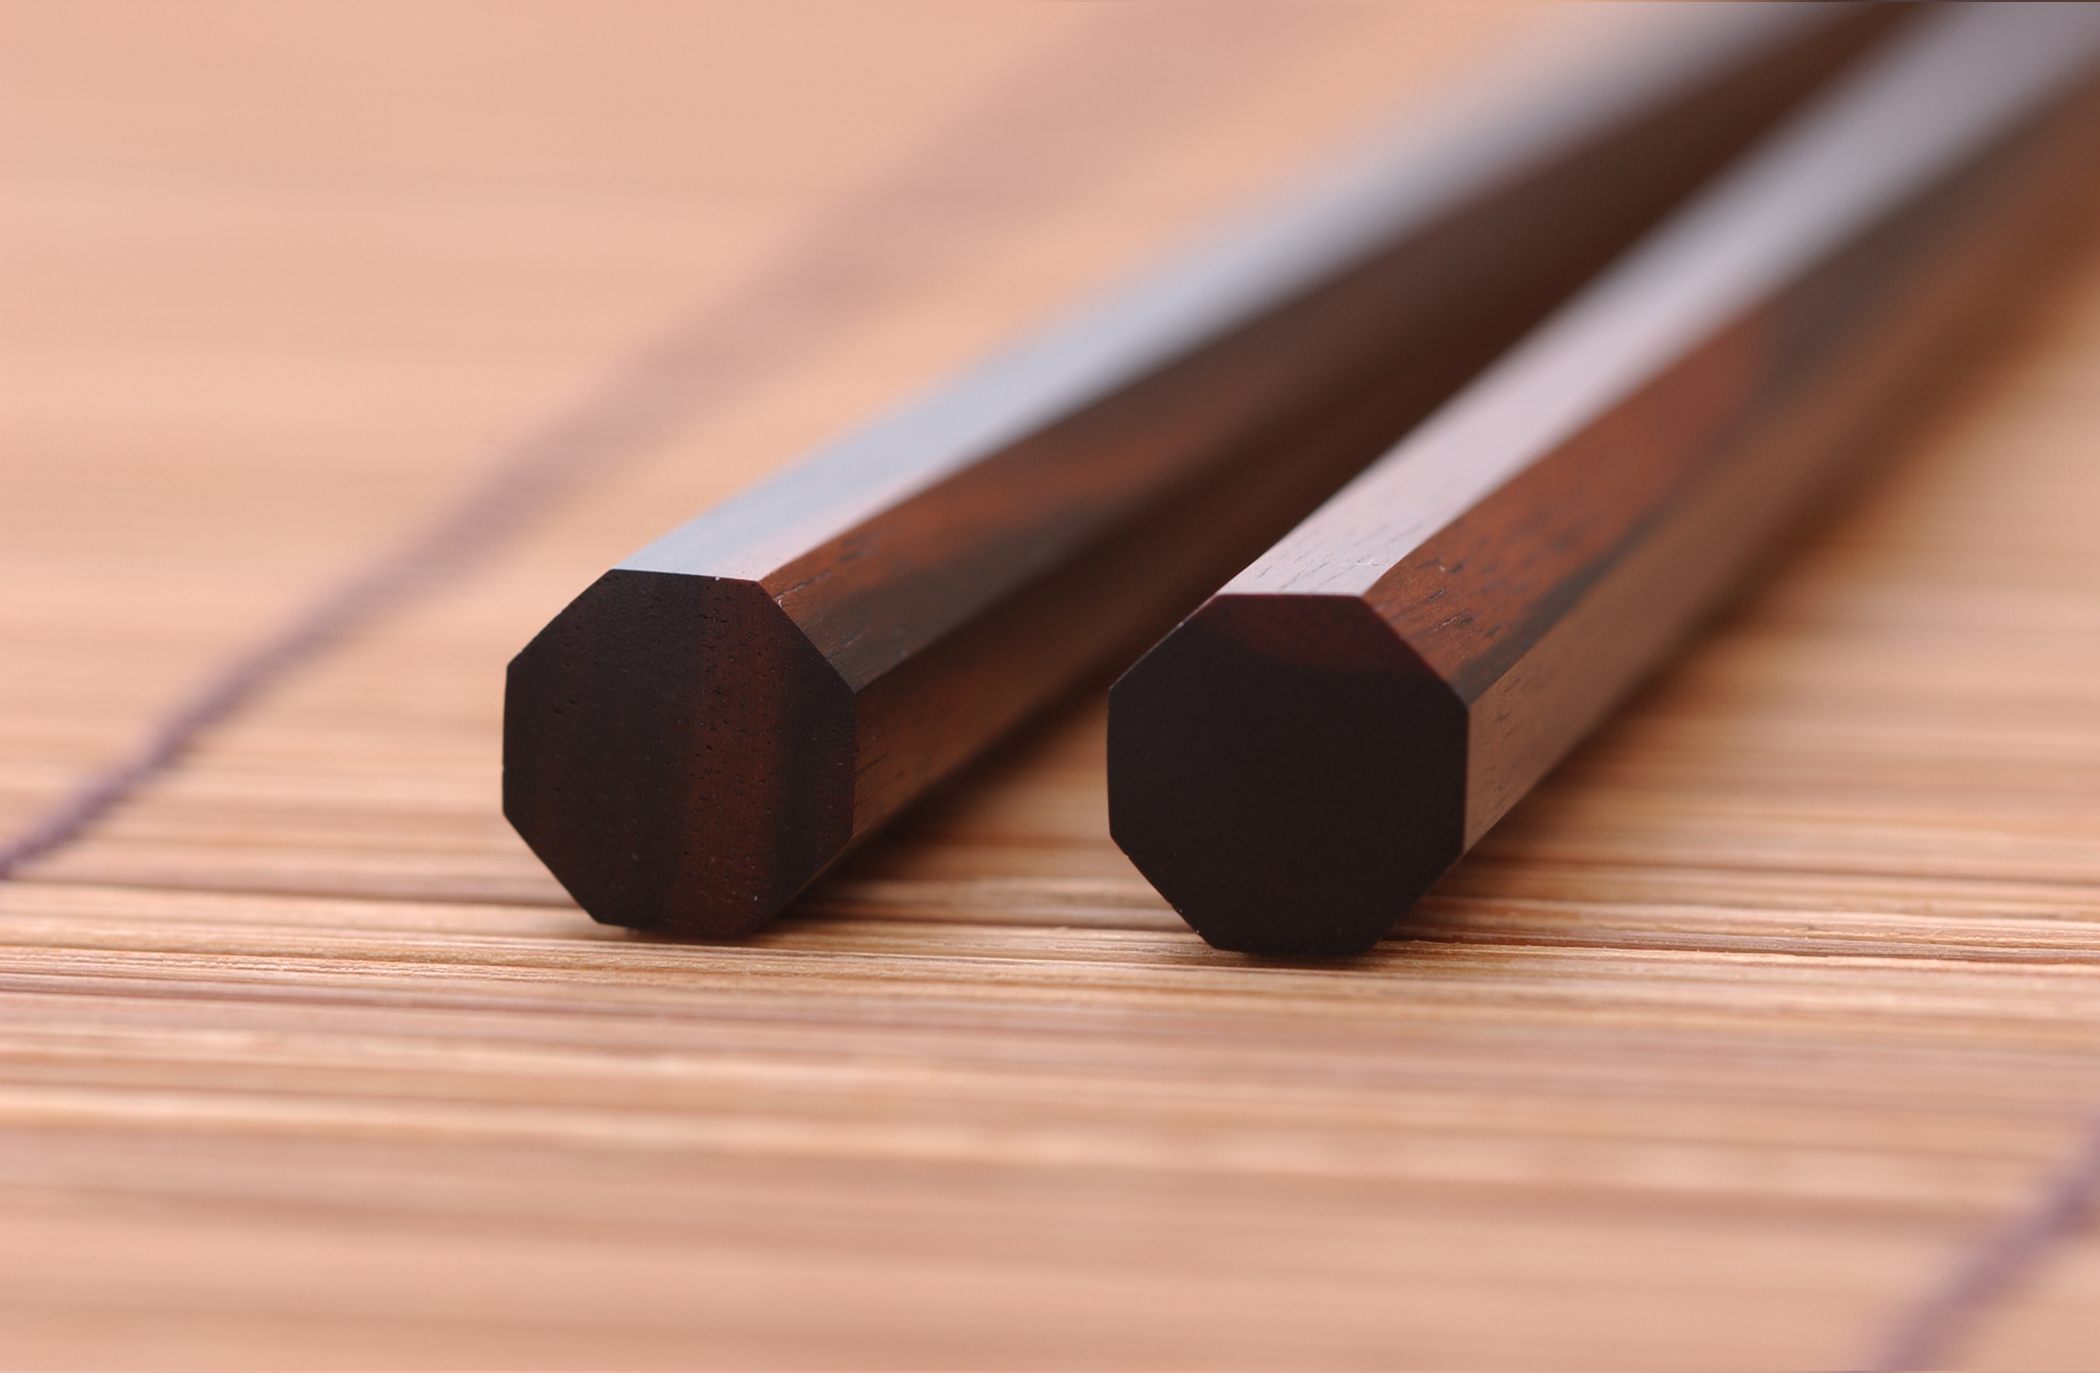 Chopsticks made from Exotic Hardwoods - Ebony and Paduk — Rescued Woodworks  LLC